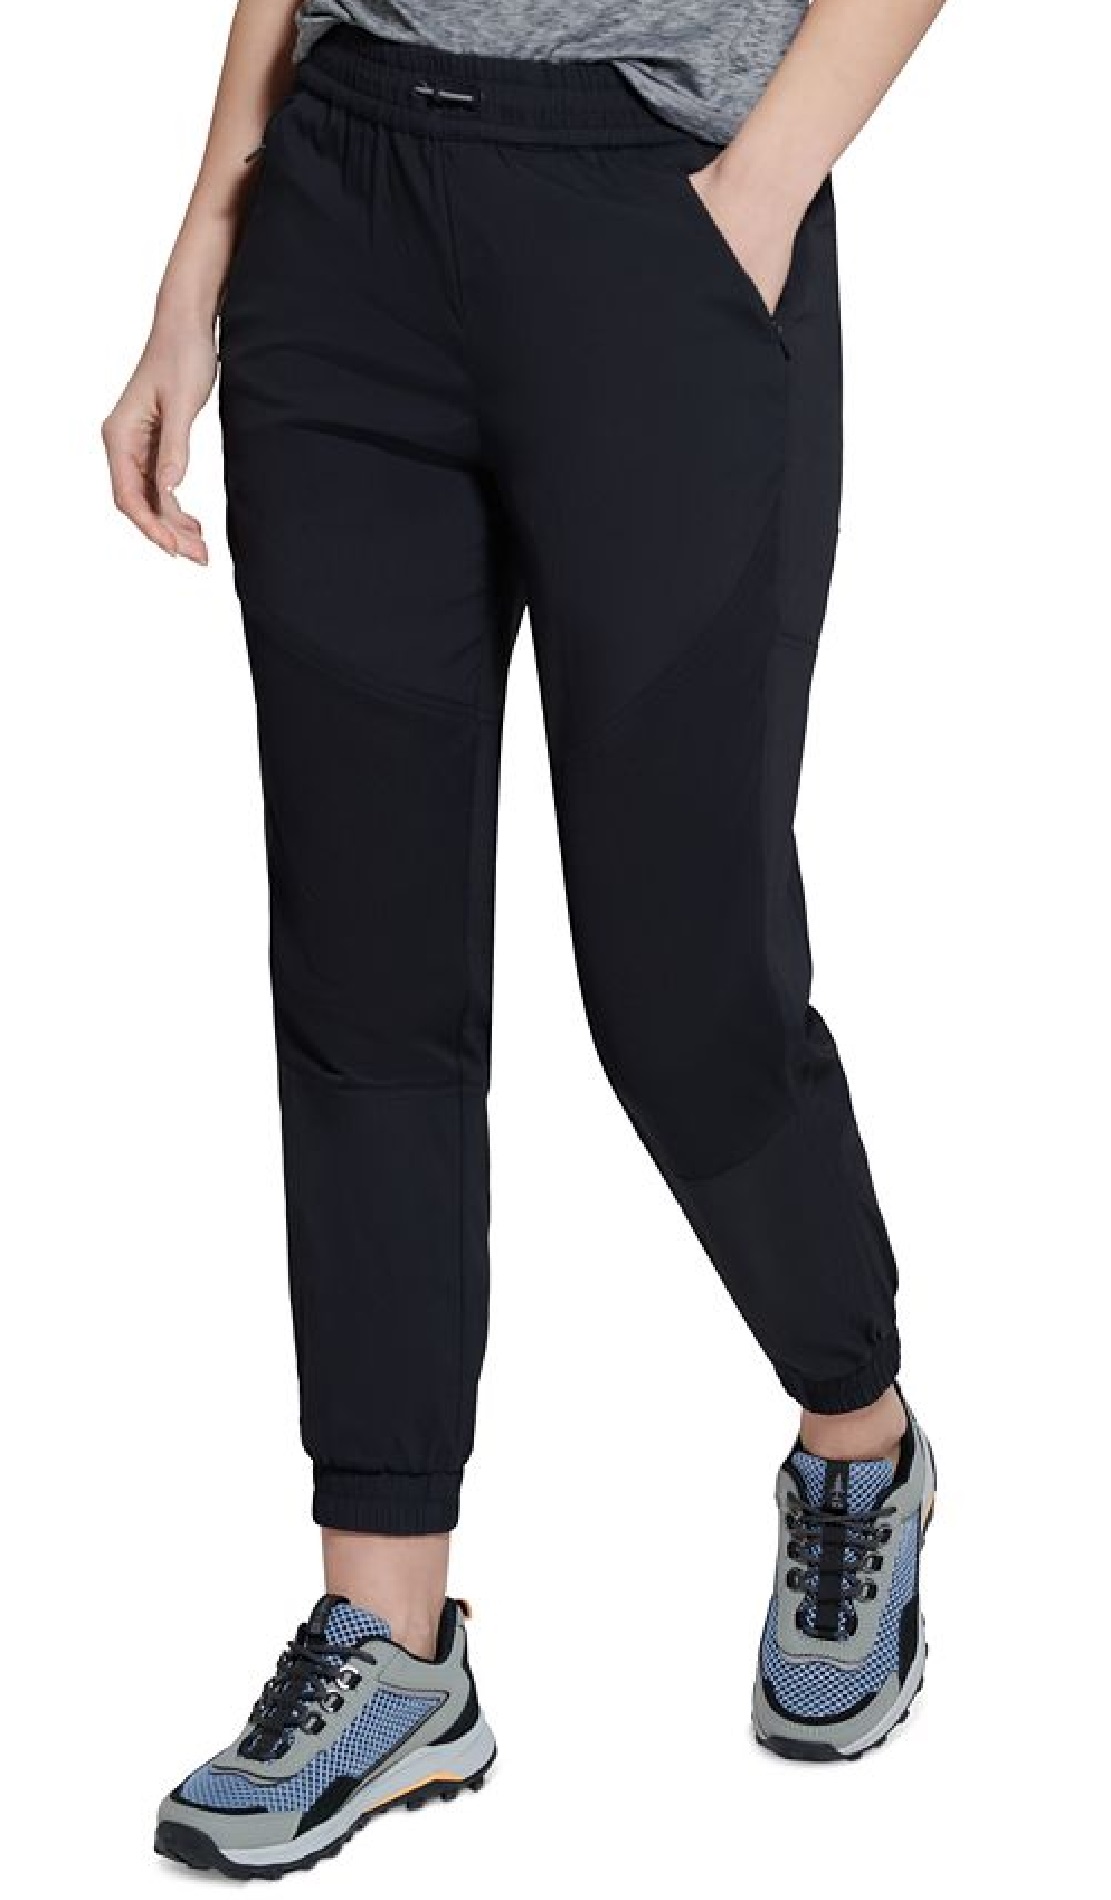 Bass Outdoor Women's Roque Pants Black Size Medium